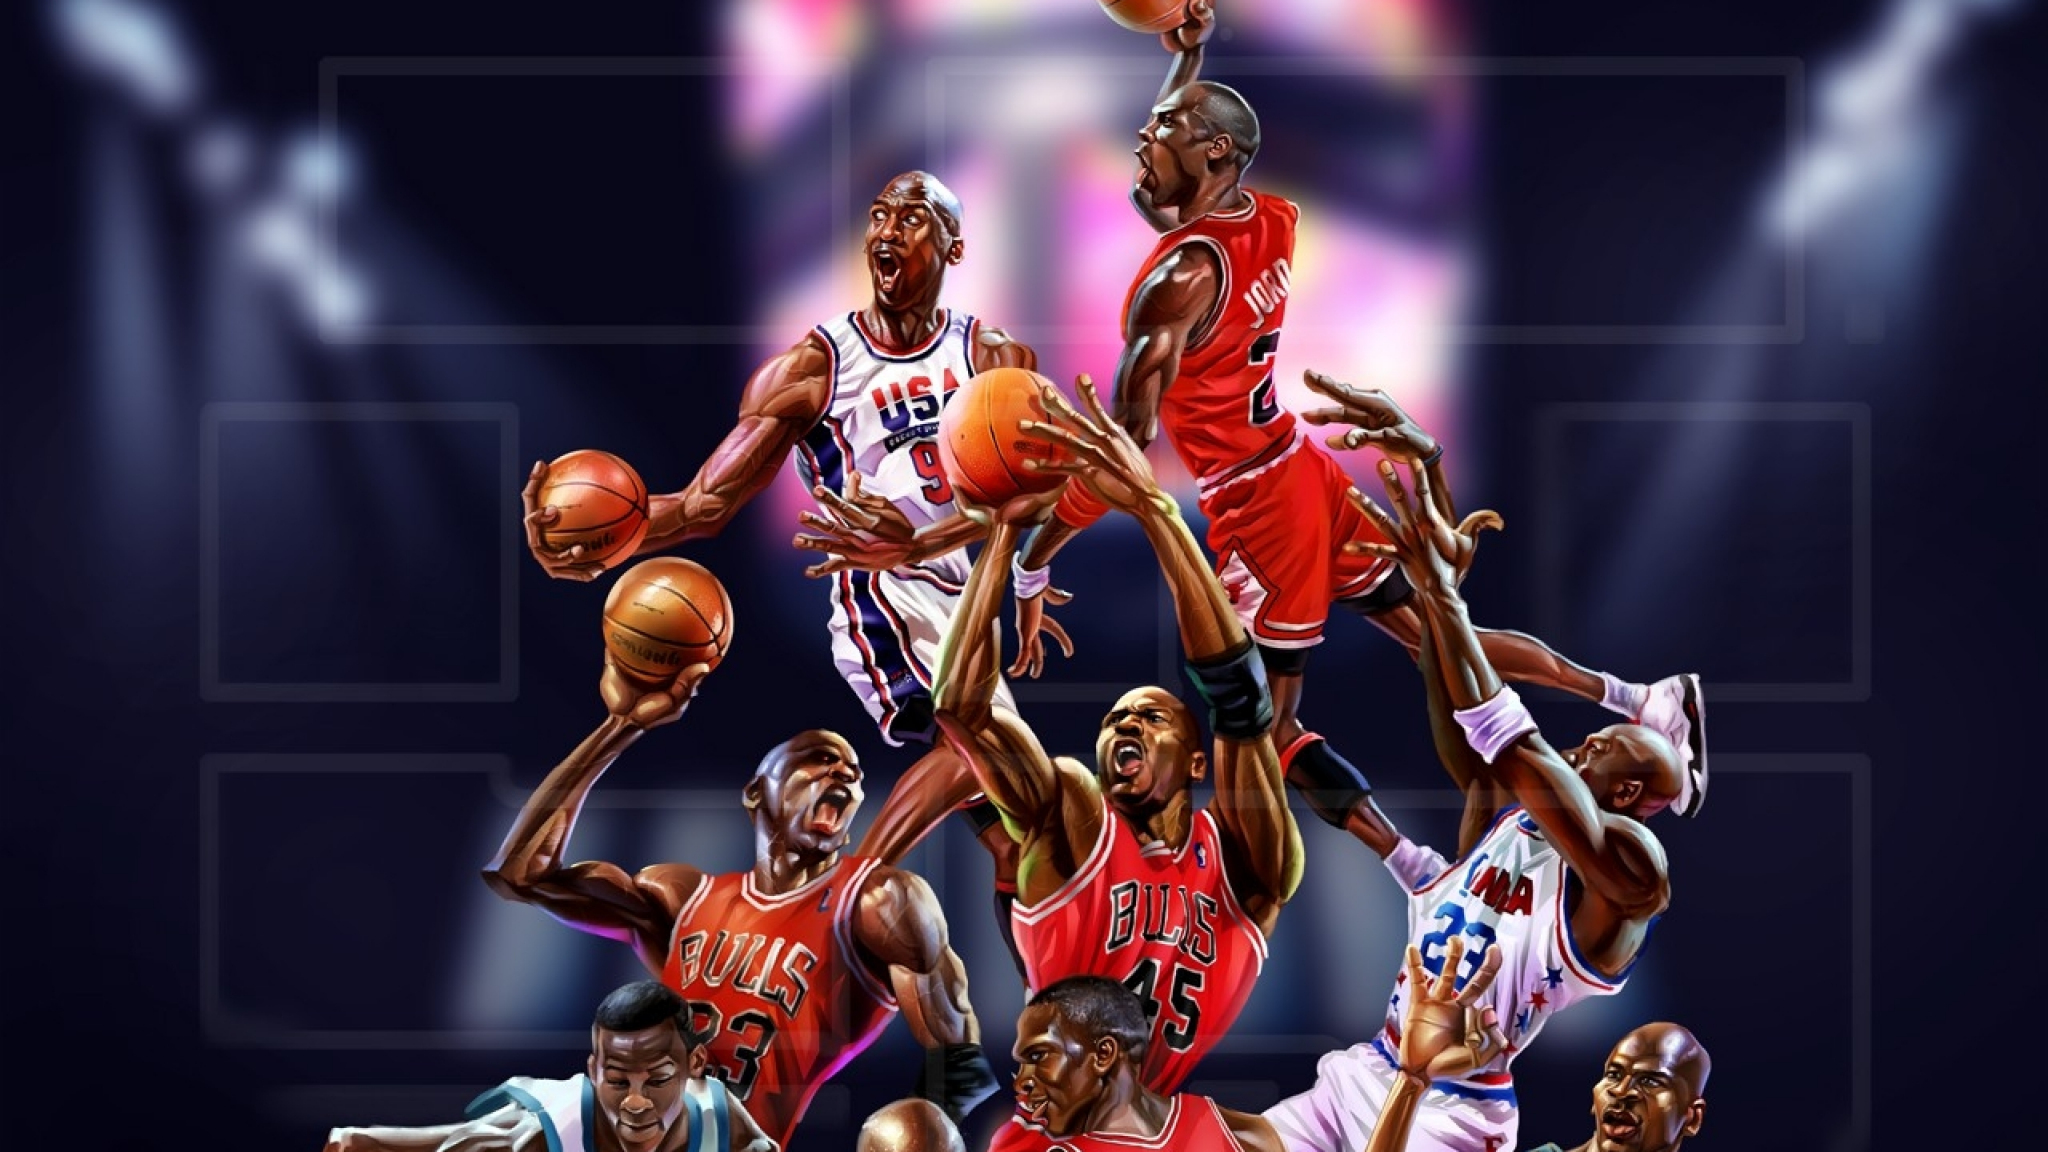 Desktop Wallpaper Nba, Basketball, Sports, Players, Art, HD Image, Picture, Background, 766c9b